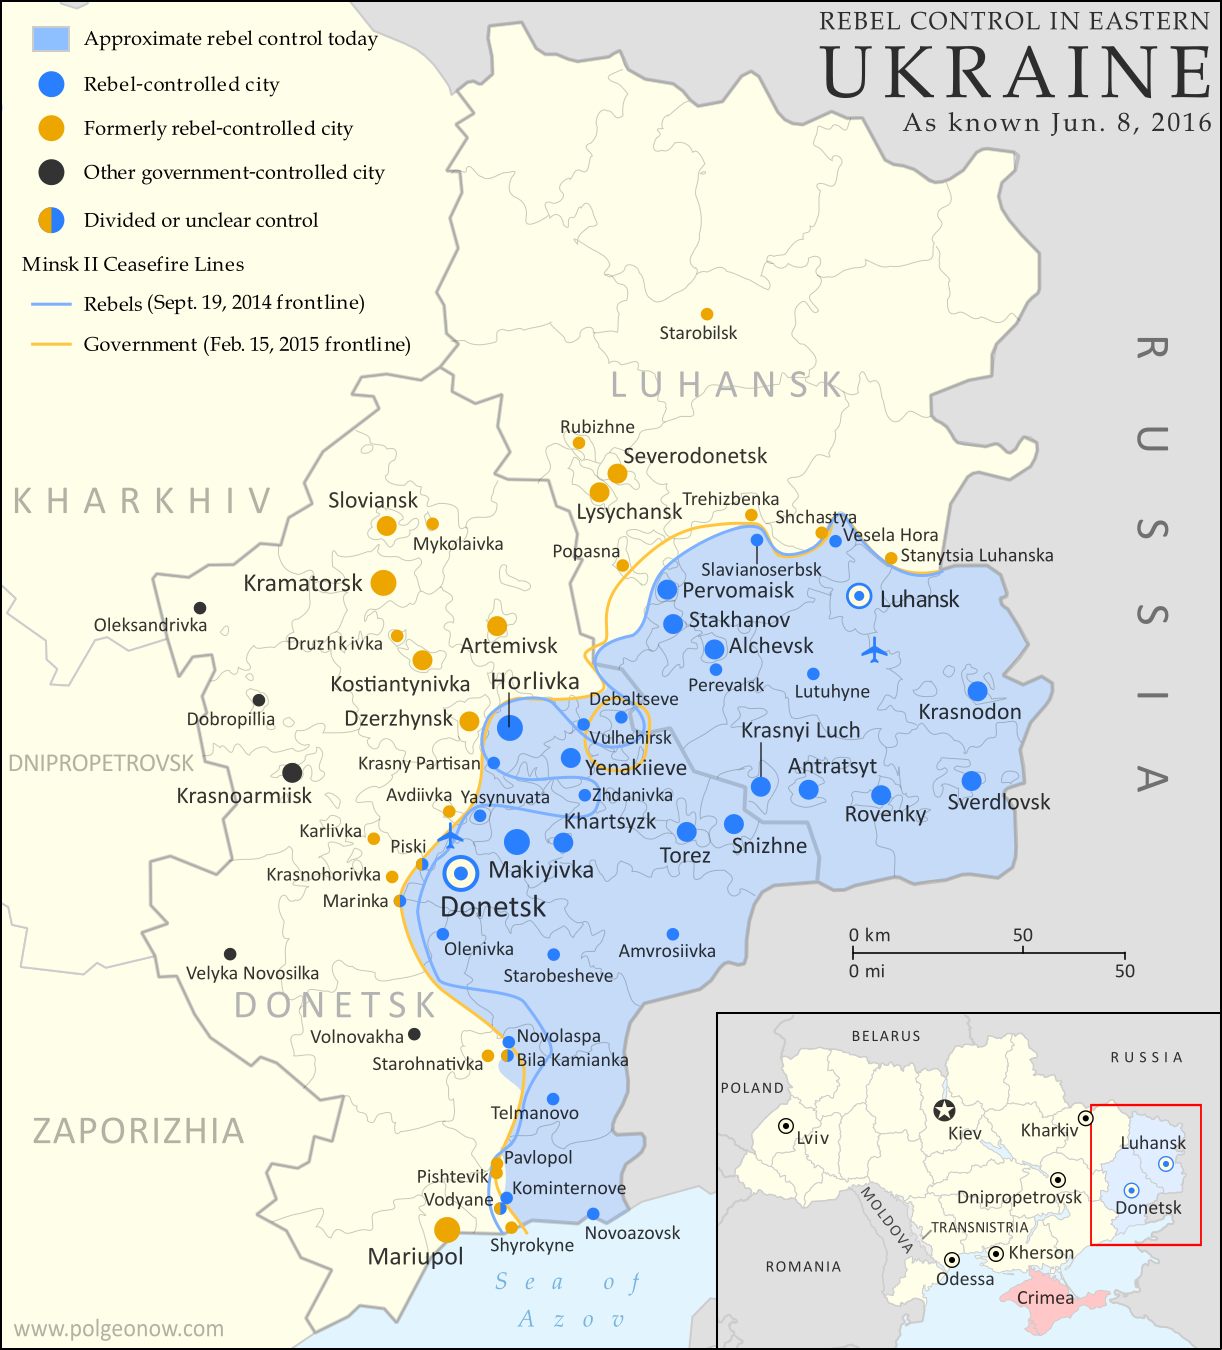 Ukraine: unexpected events in conflict zone - JAMnews